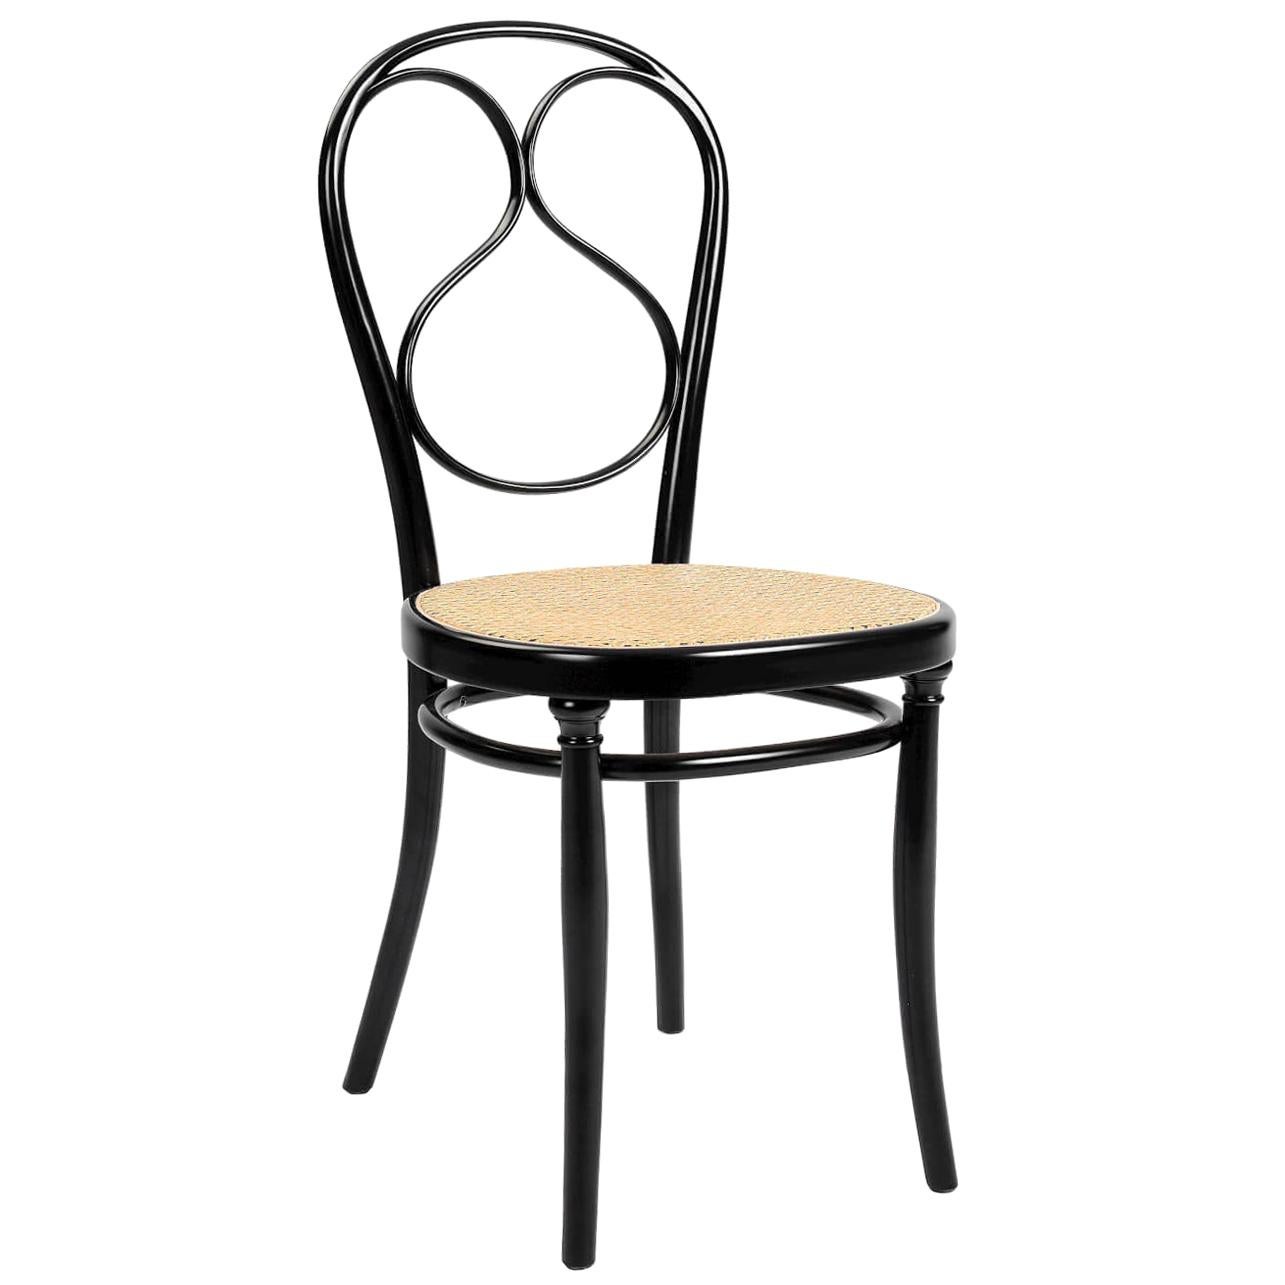 Gebrüder Thonet Vienna GmbH N.1 Chair in Black with Cane Seat For Sale